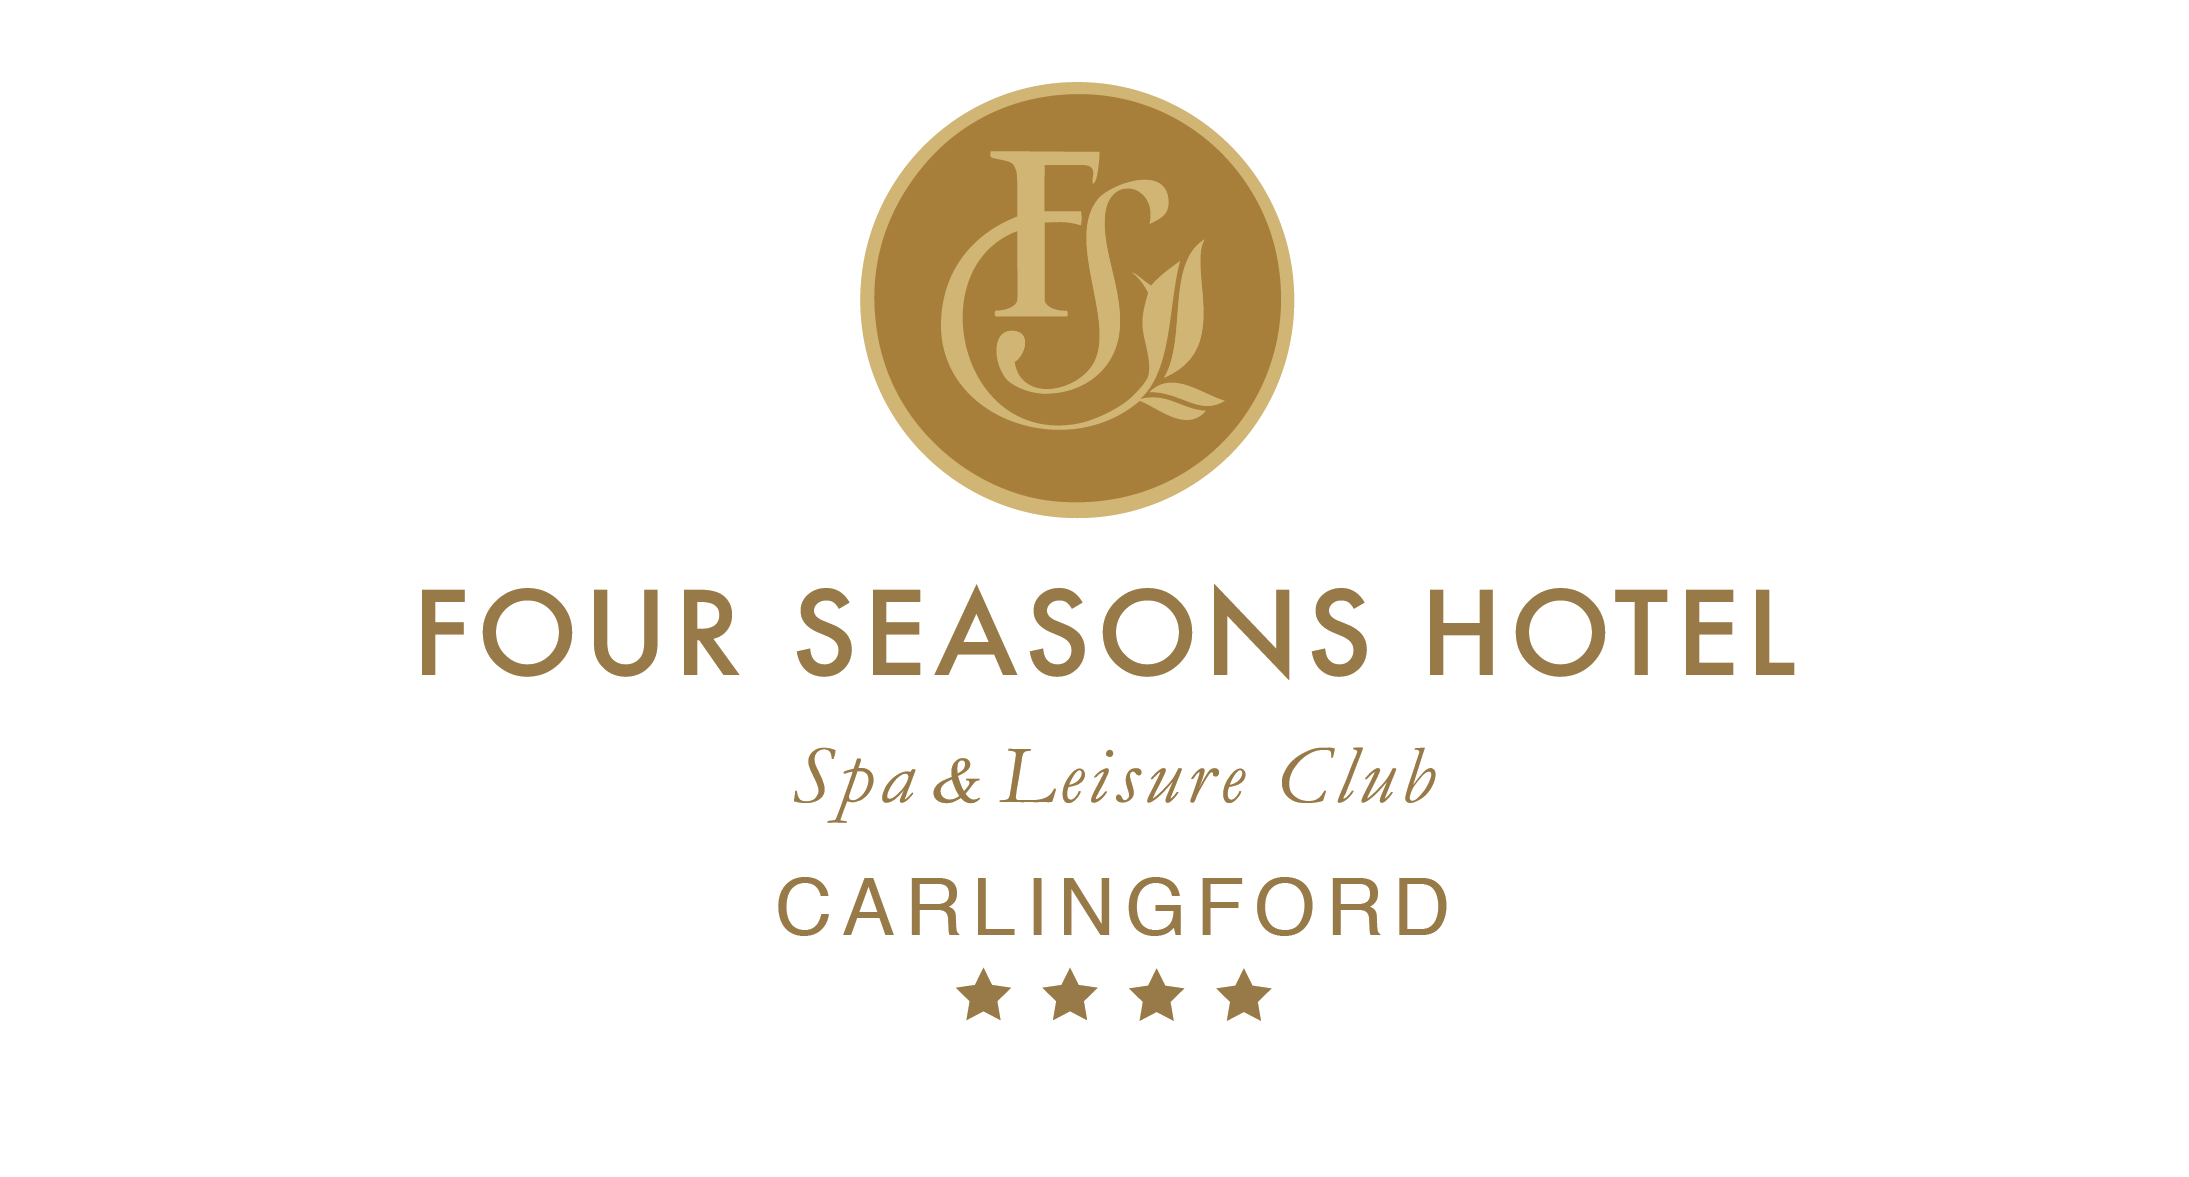 Hotel Four Seasons, Spa &amp; Leisure Club, Carlingford Logo 1